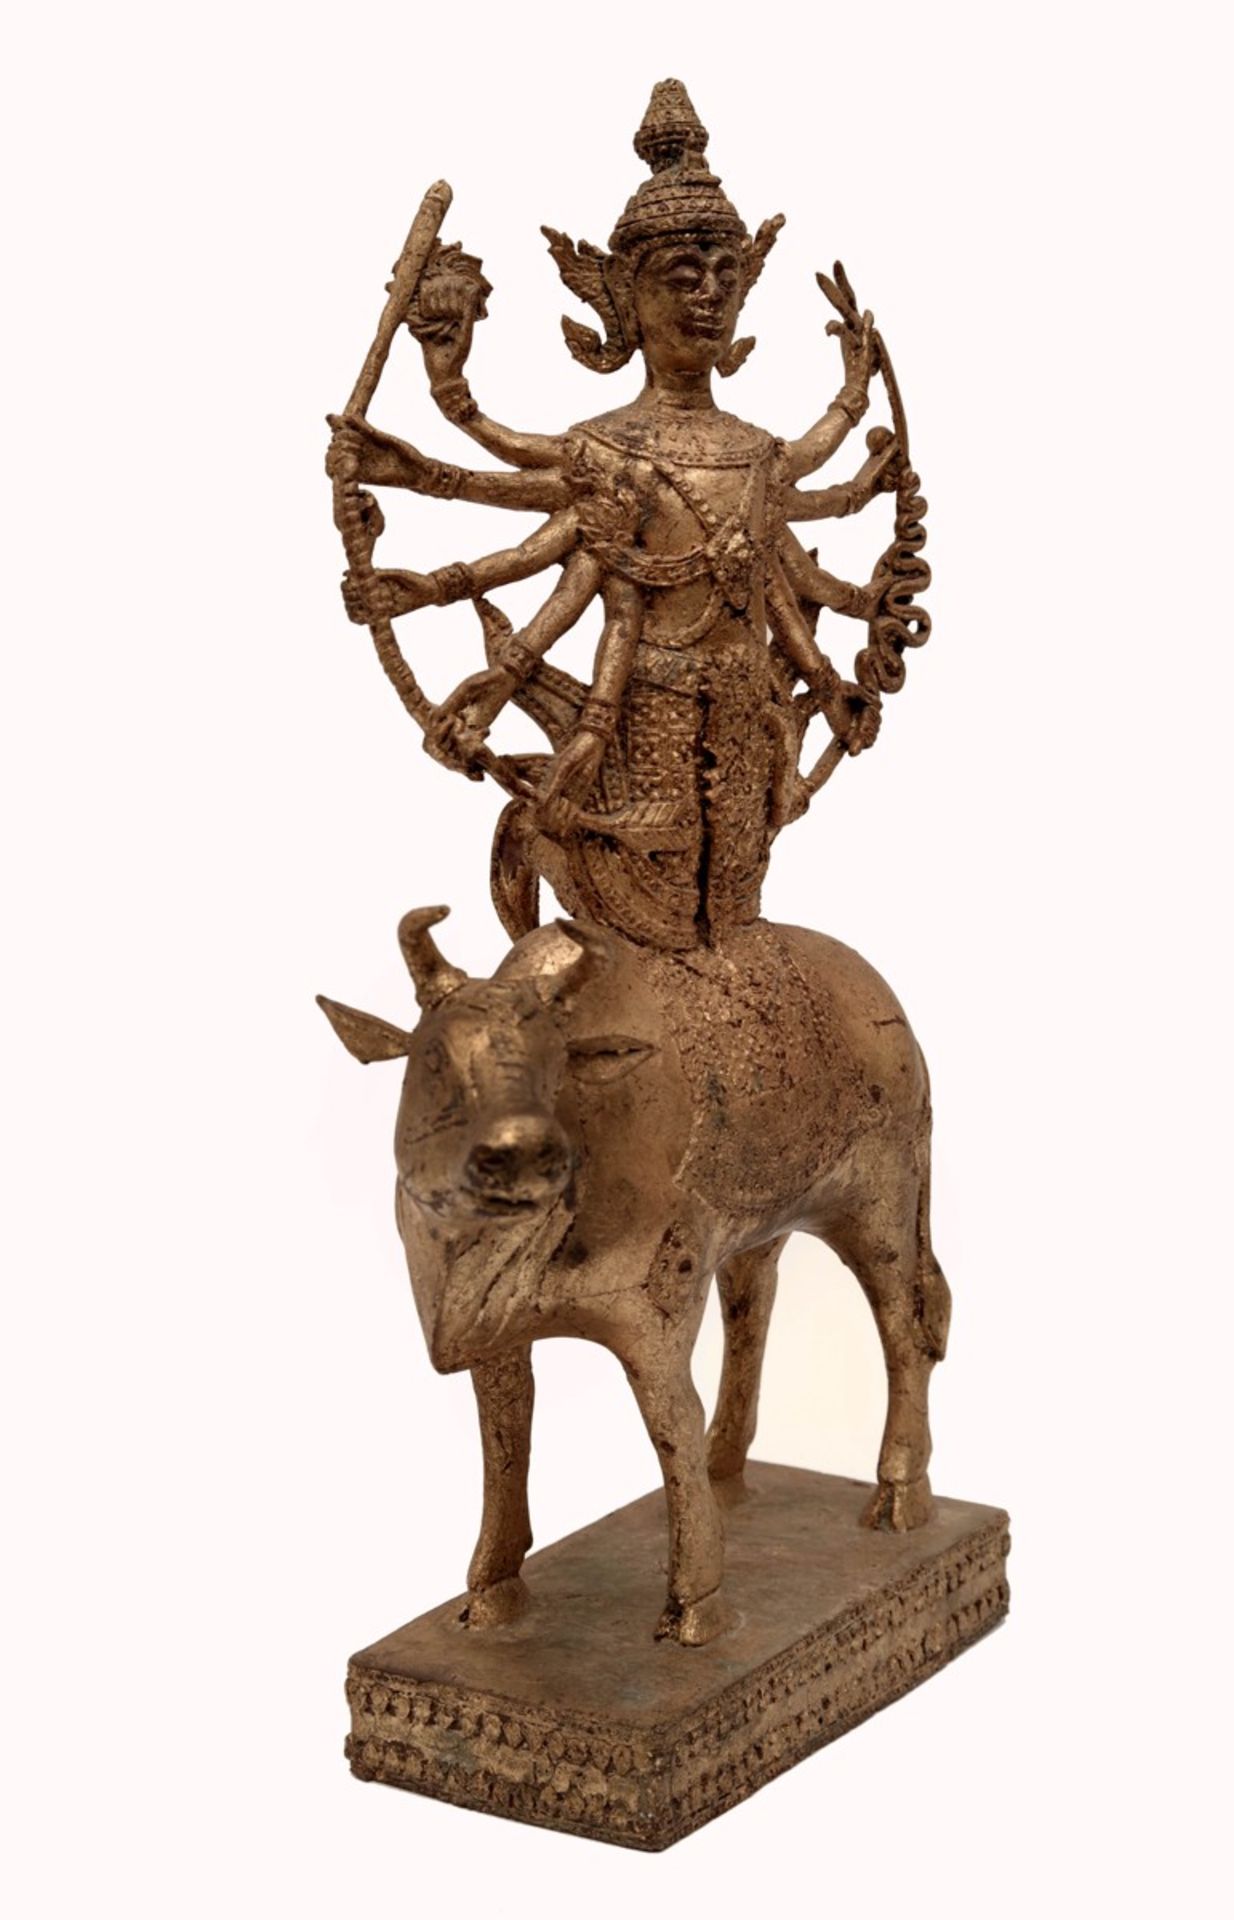 A Shiva on the Bull Nandi - Image 3 of 3